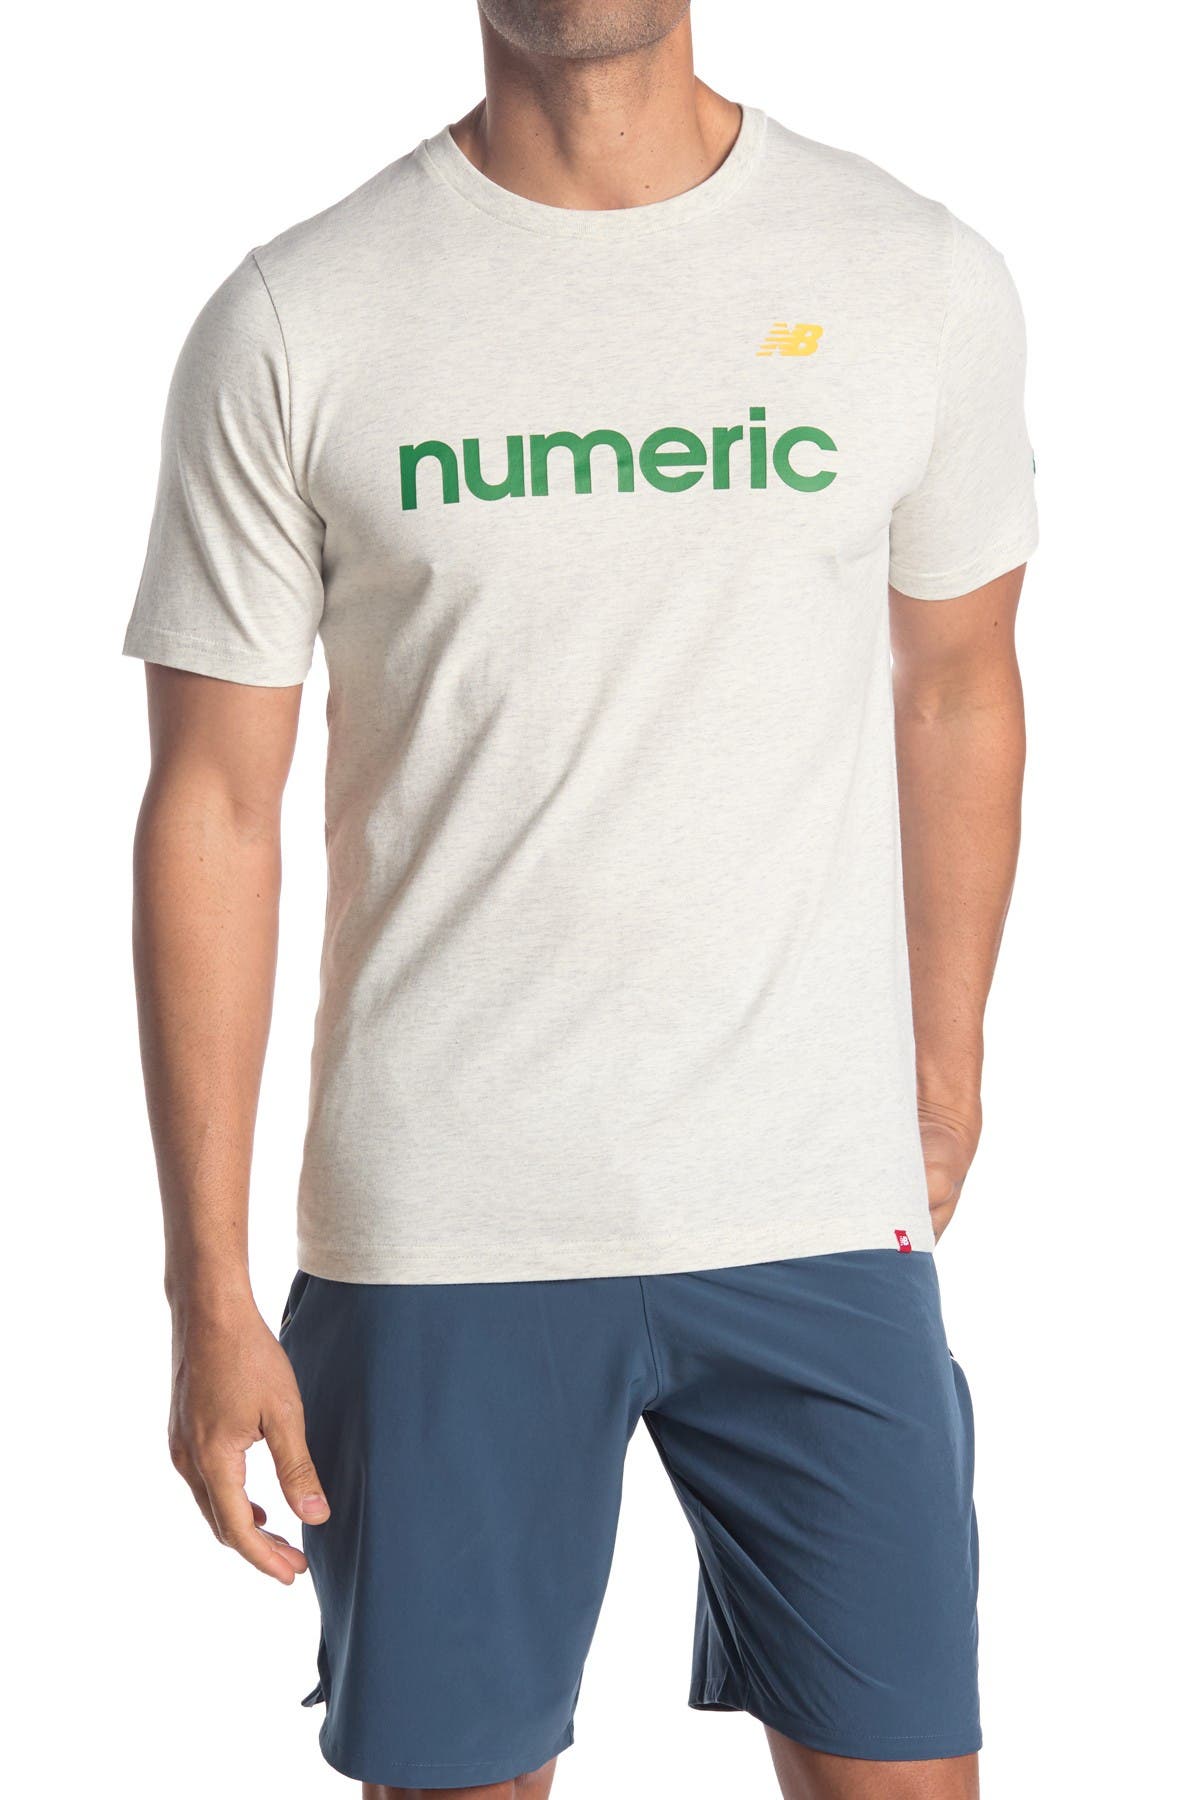 new balance numeric t shirt